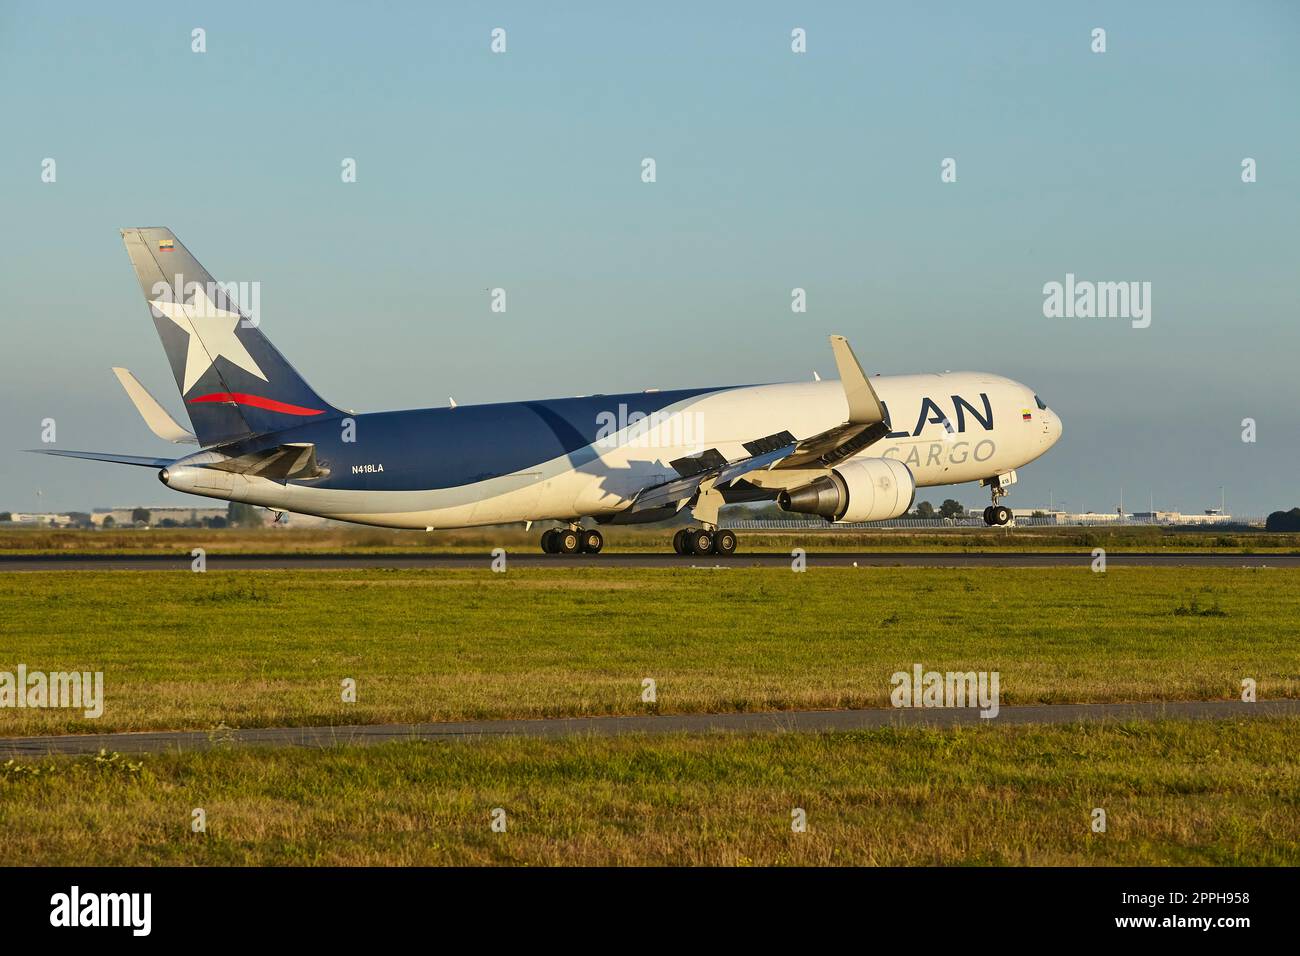 File:Frankfurt Airport 21 Air LATAM Cargo Colombia Boeing 767